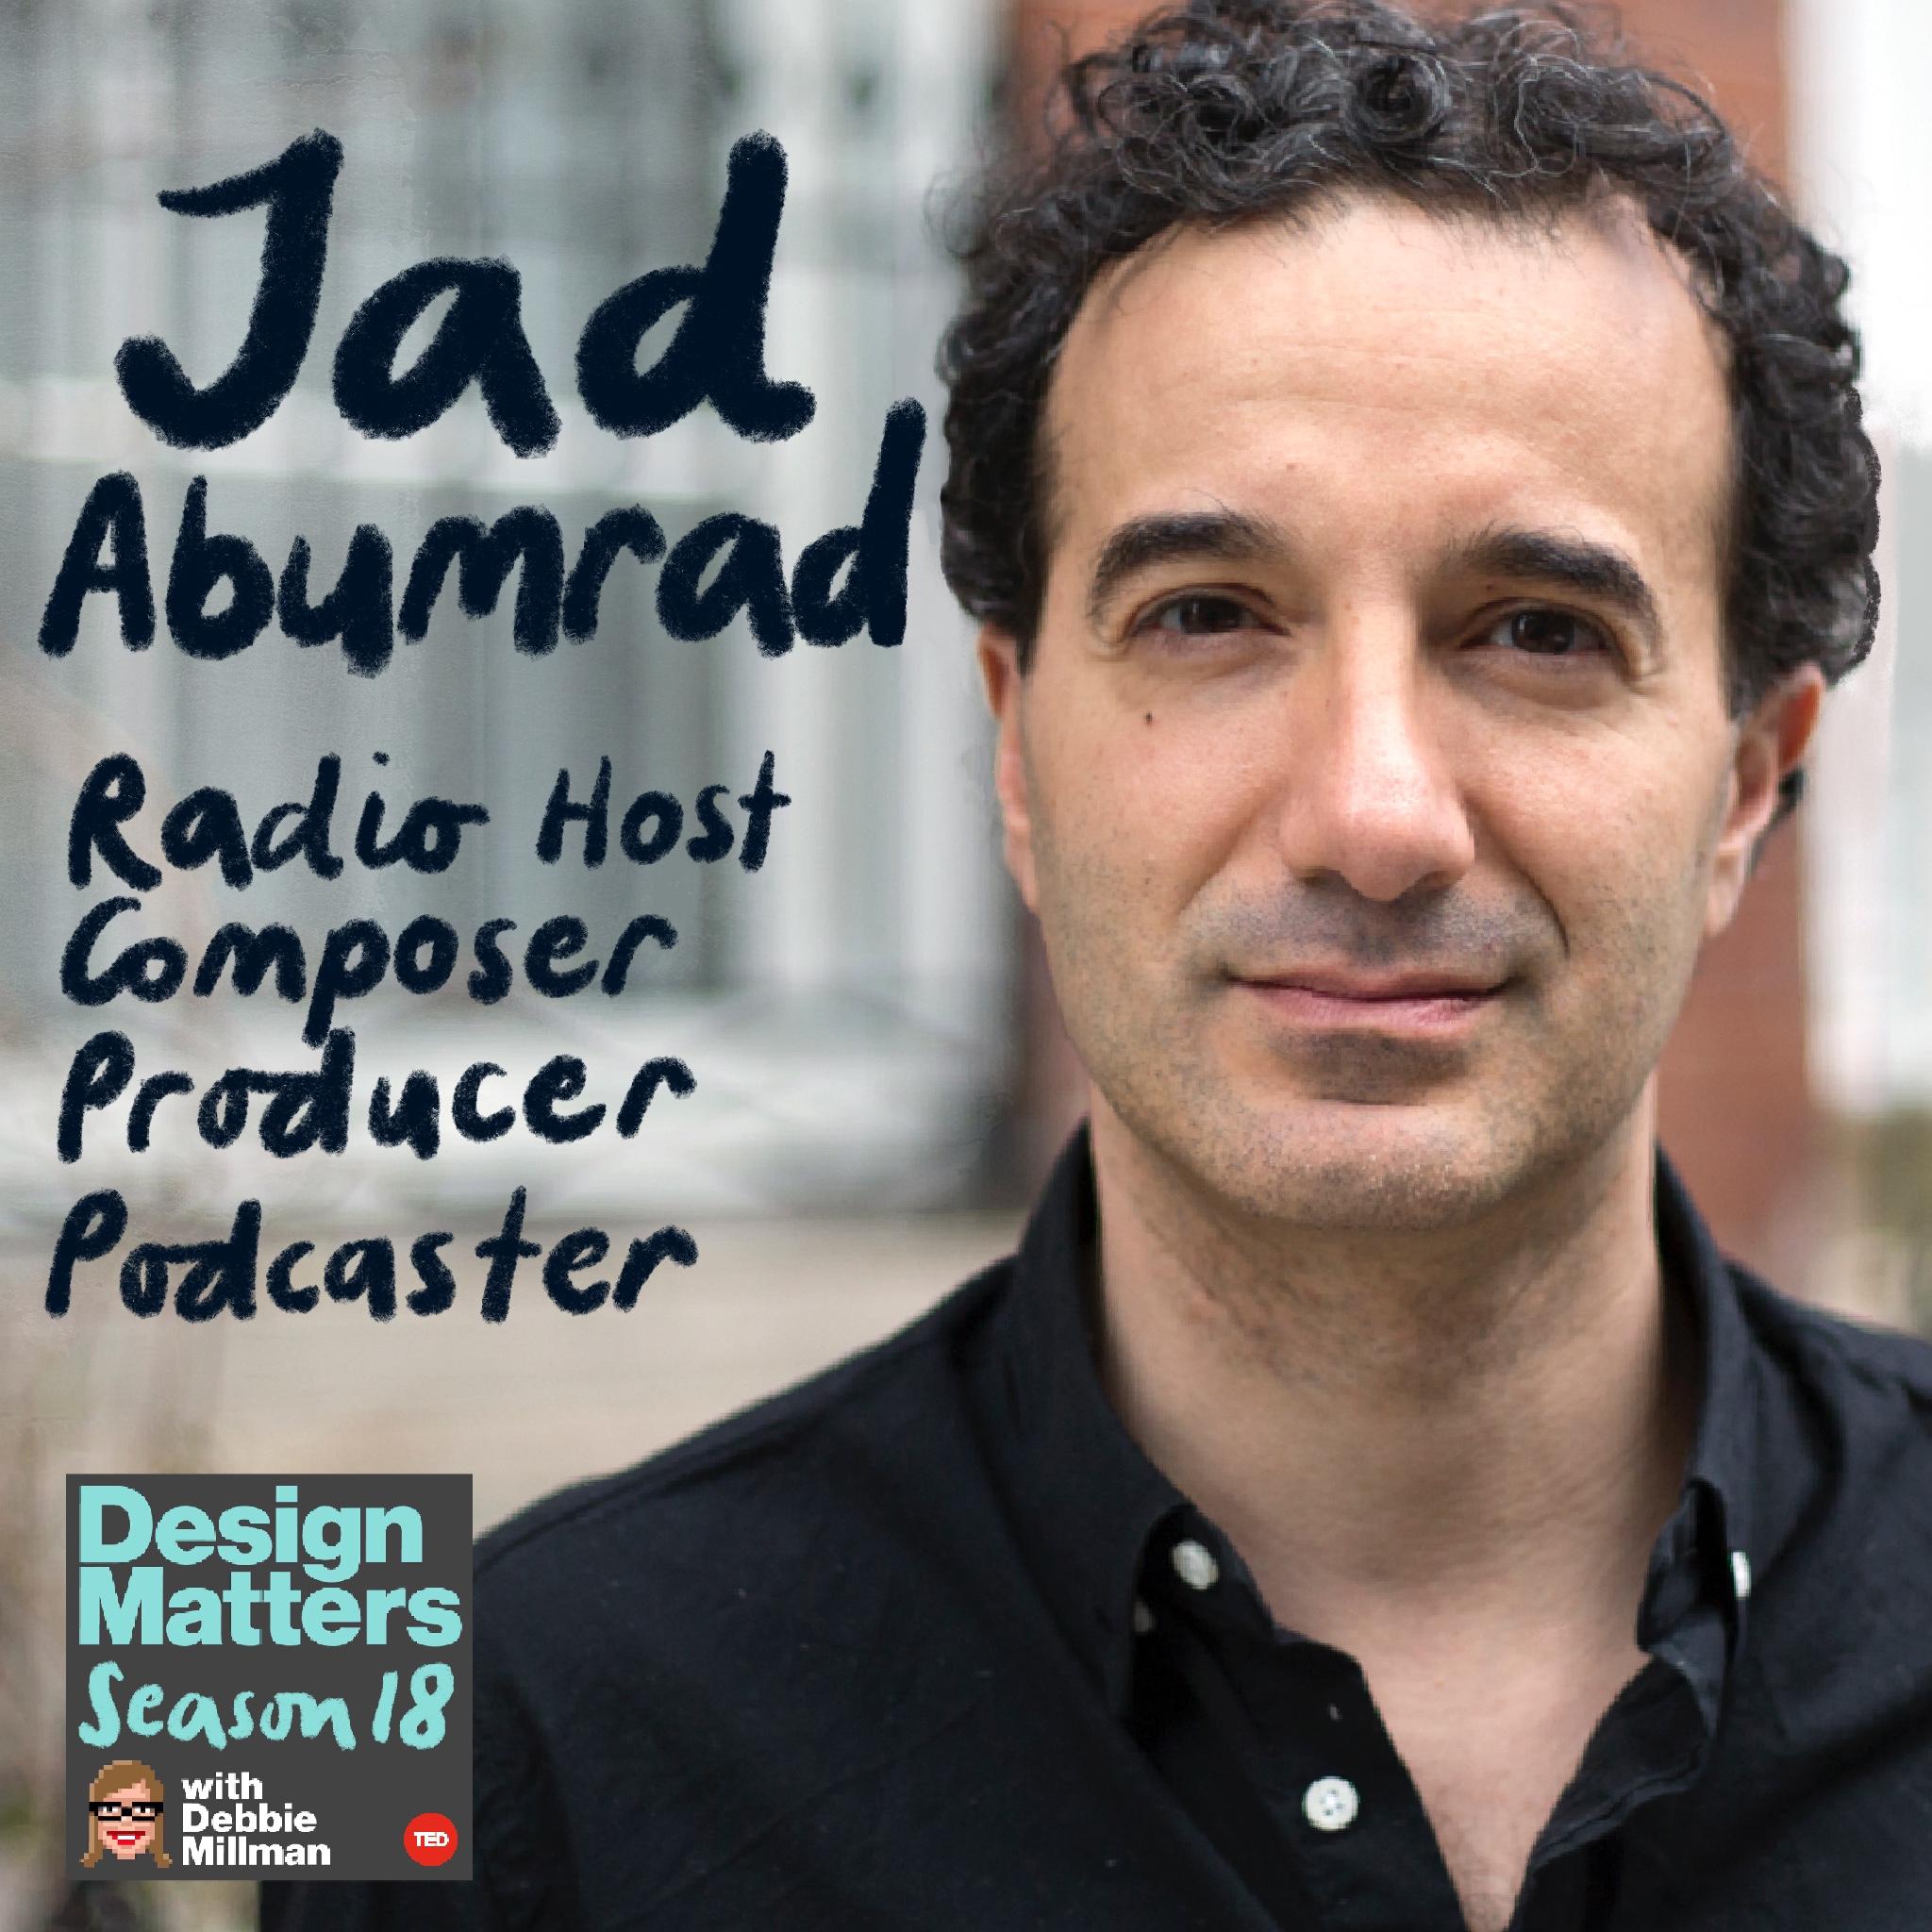 Thumbnail for "Jad Abumrad".